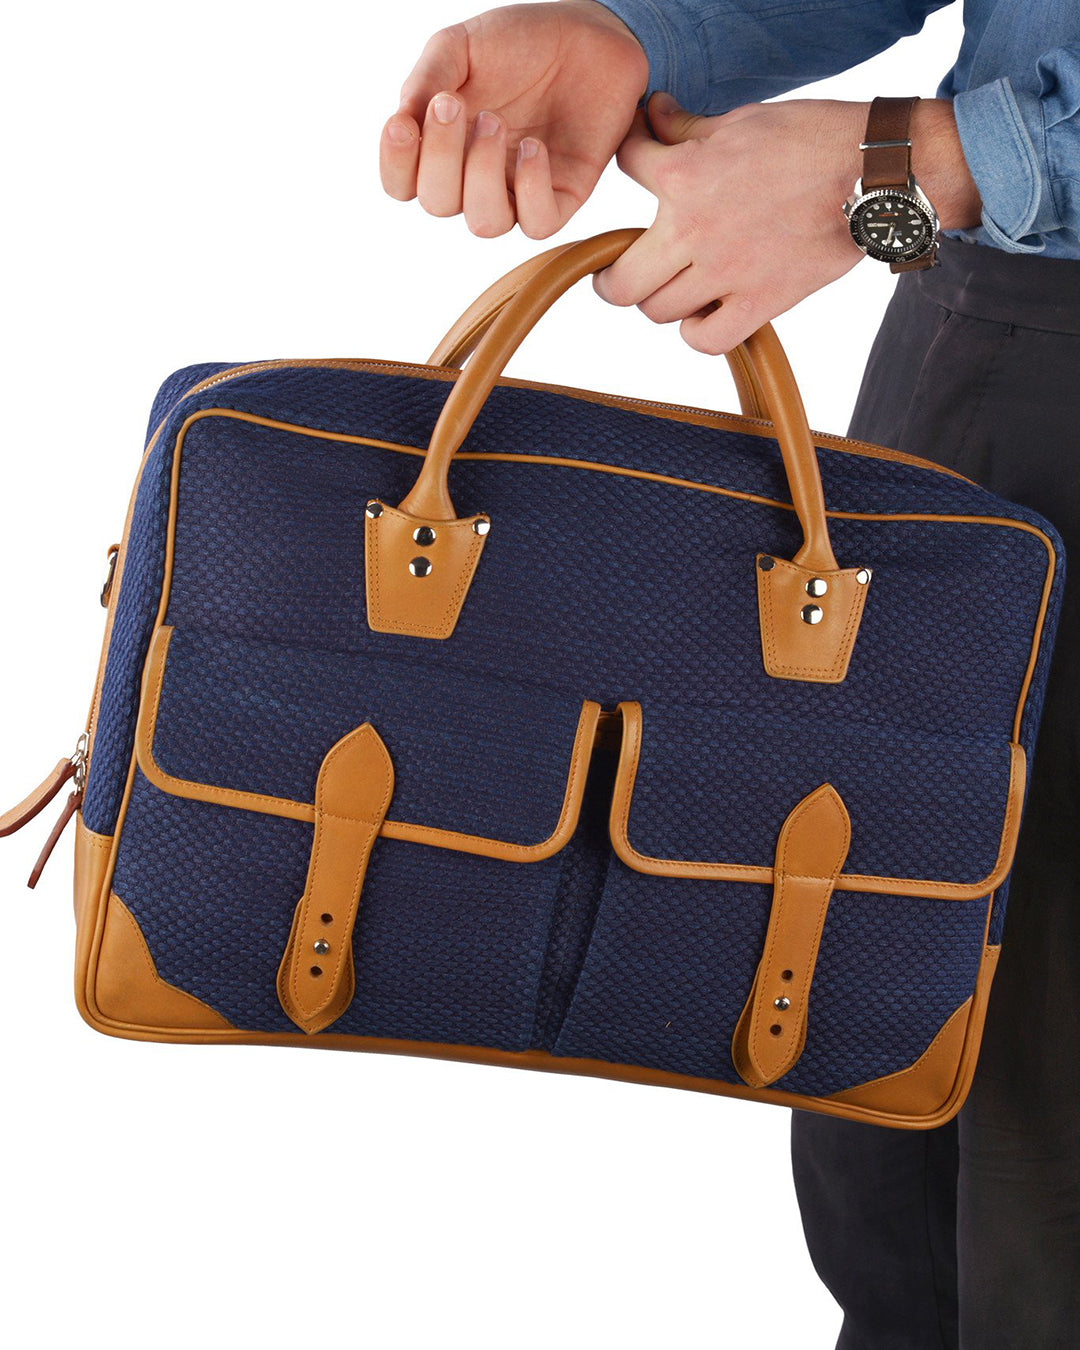 Luxire Portfolio Office Bag in Leather & Sashiko